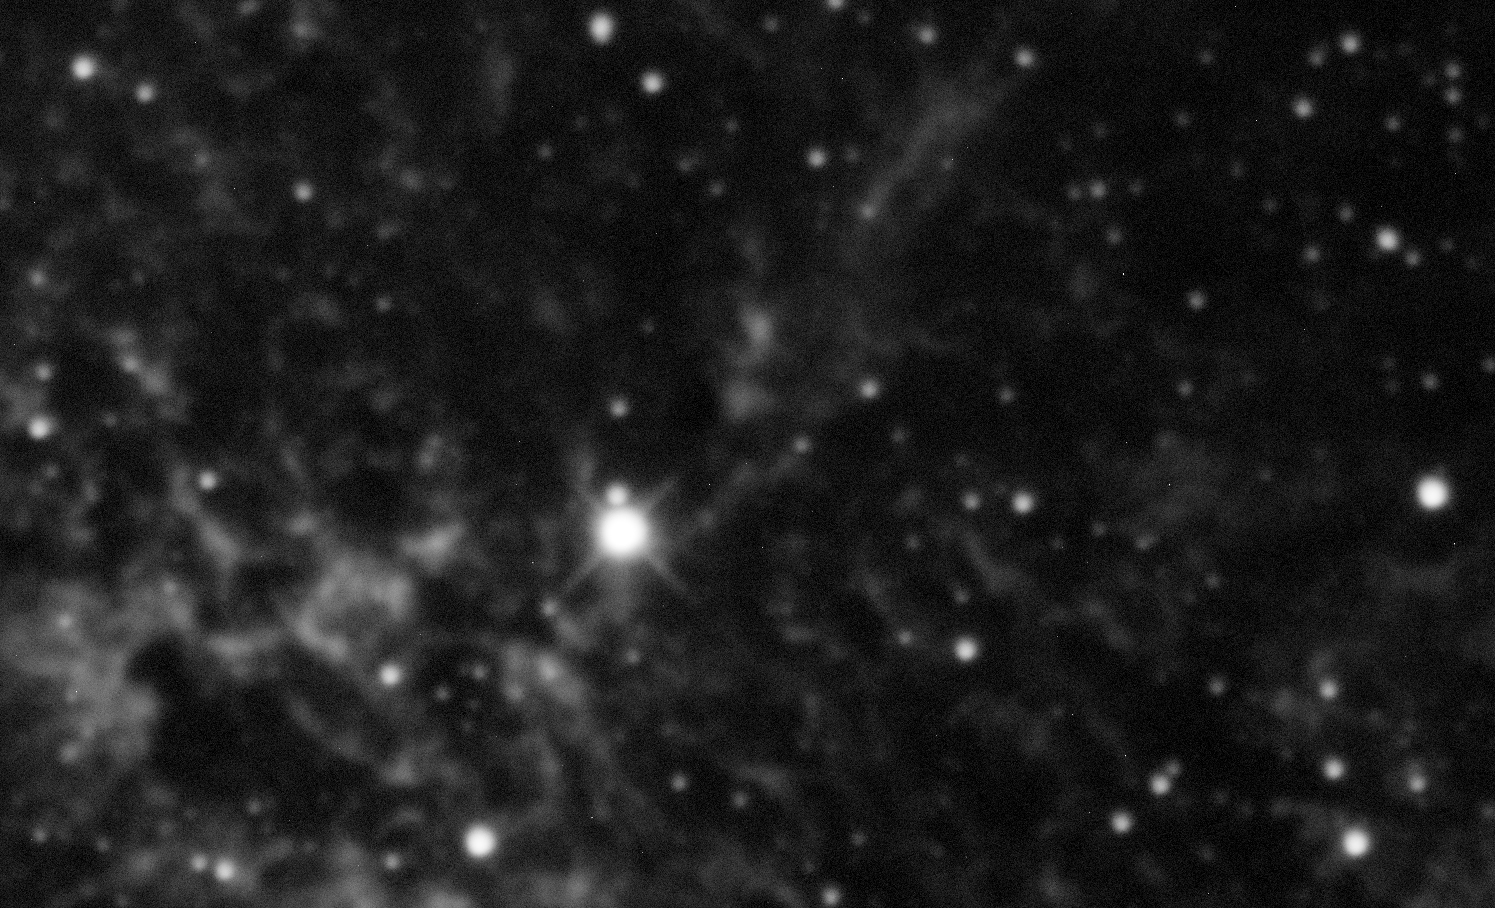 593870b11d056_NGC6888DDj1x1.jpg.4abacddaaae708b4fc4e5dca1653cab0.jpg